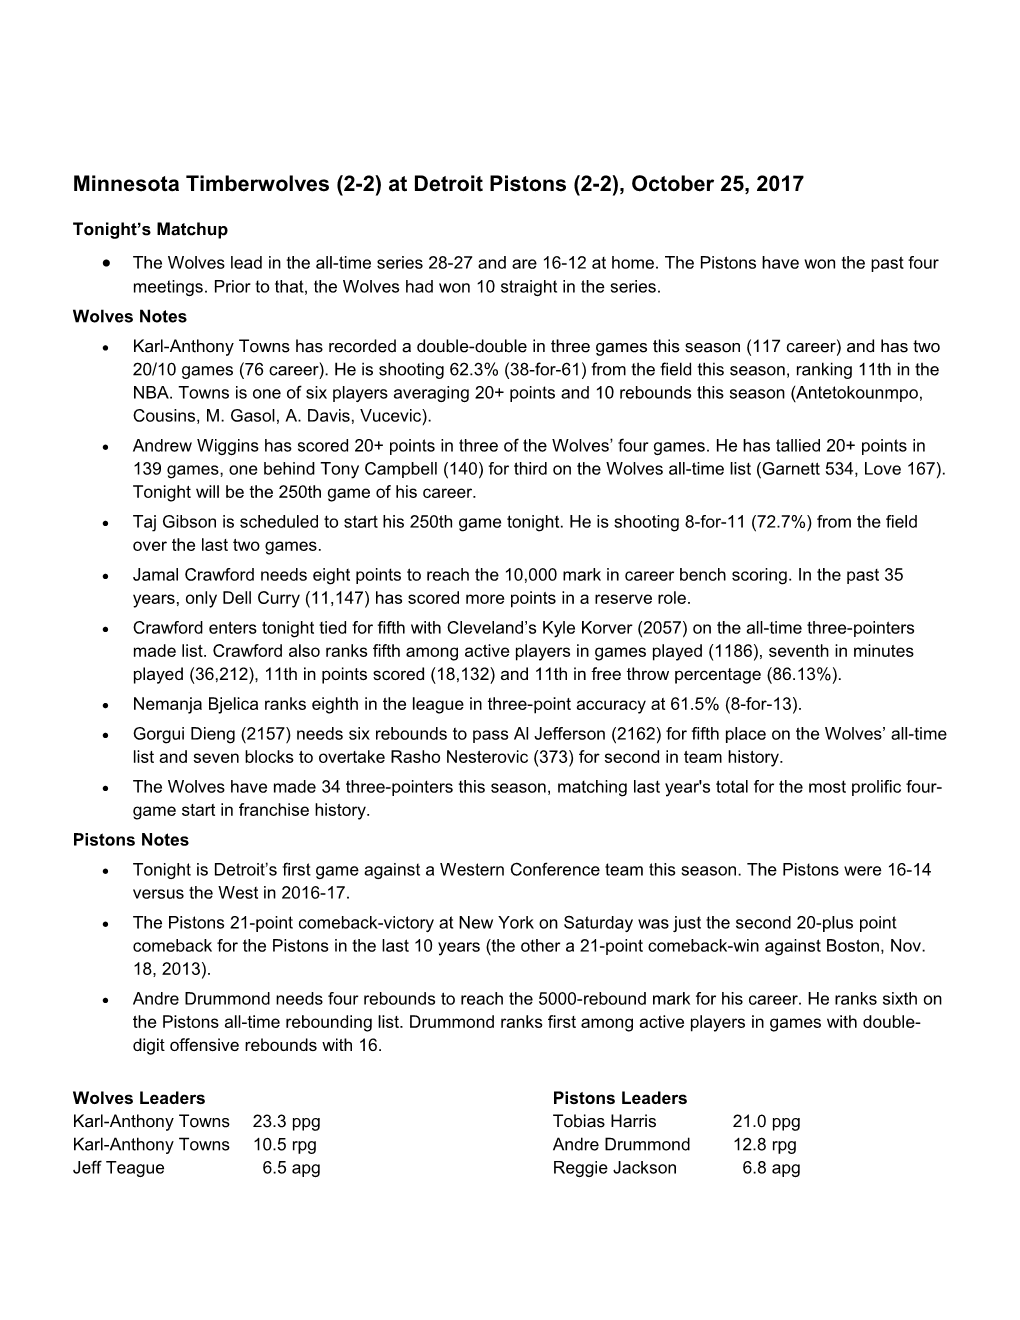 Minnesota Timberwolves (2-2)At Detroit Pistons (2-2), October 25, 2017